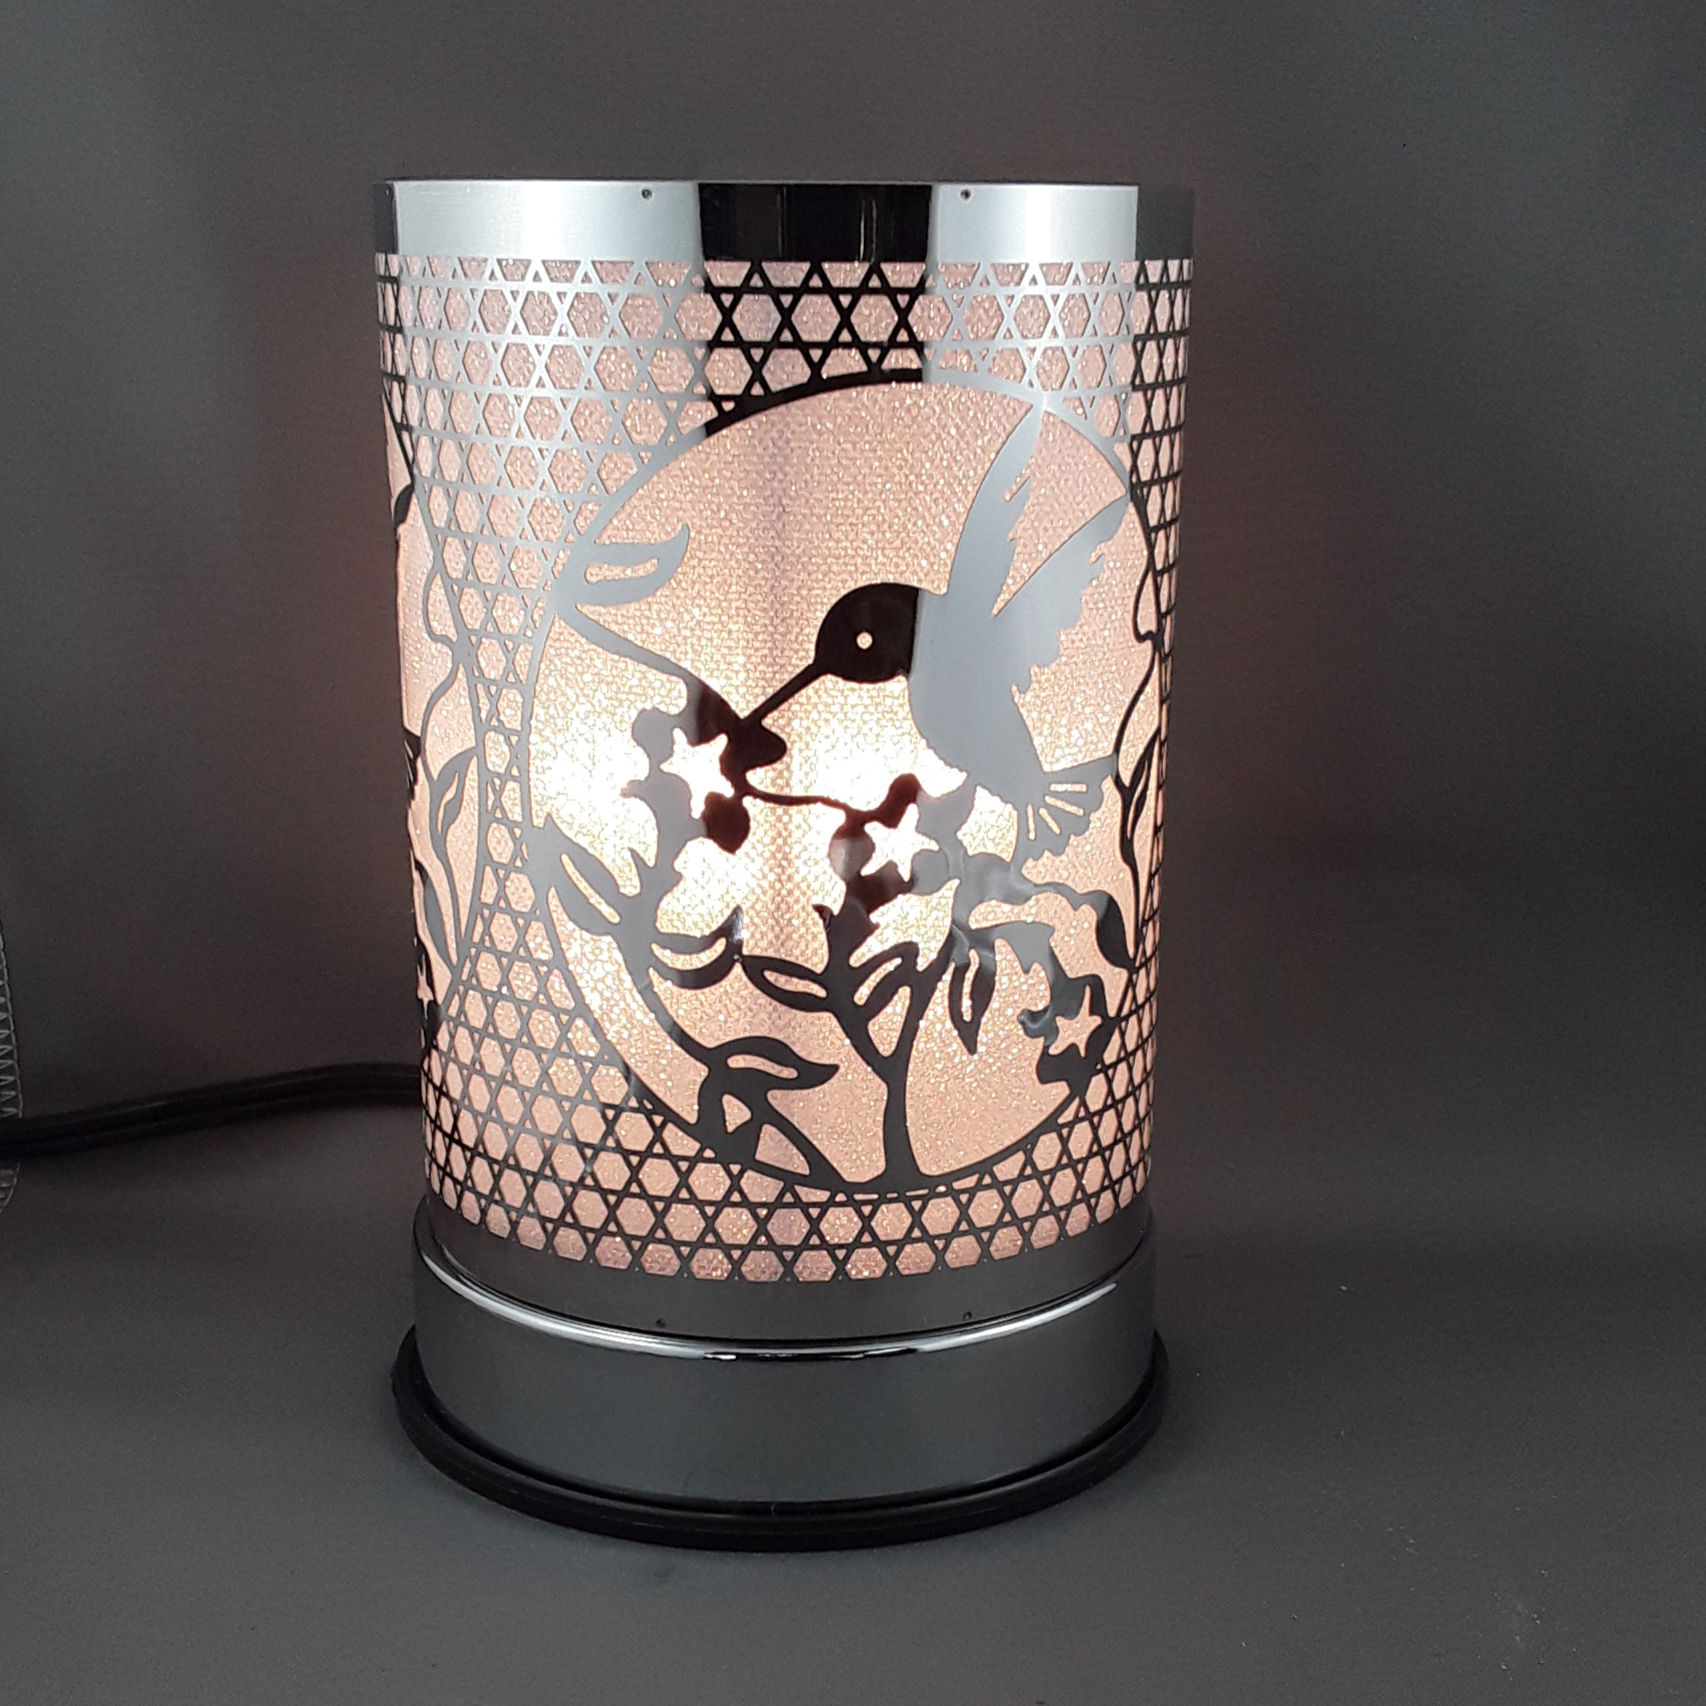 Touch lamp with oil burner | Hummingbird - Birdie’s Nest Inc 